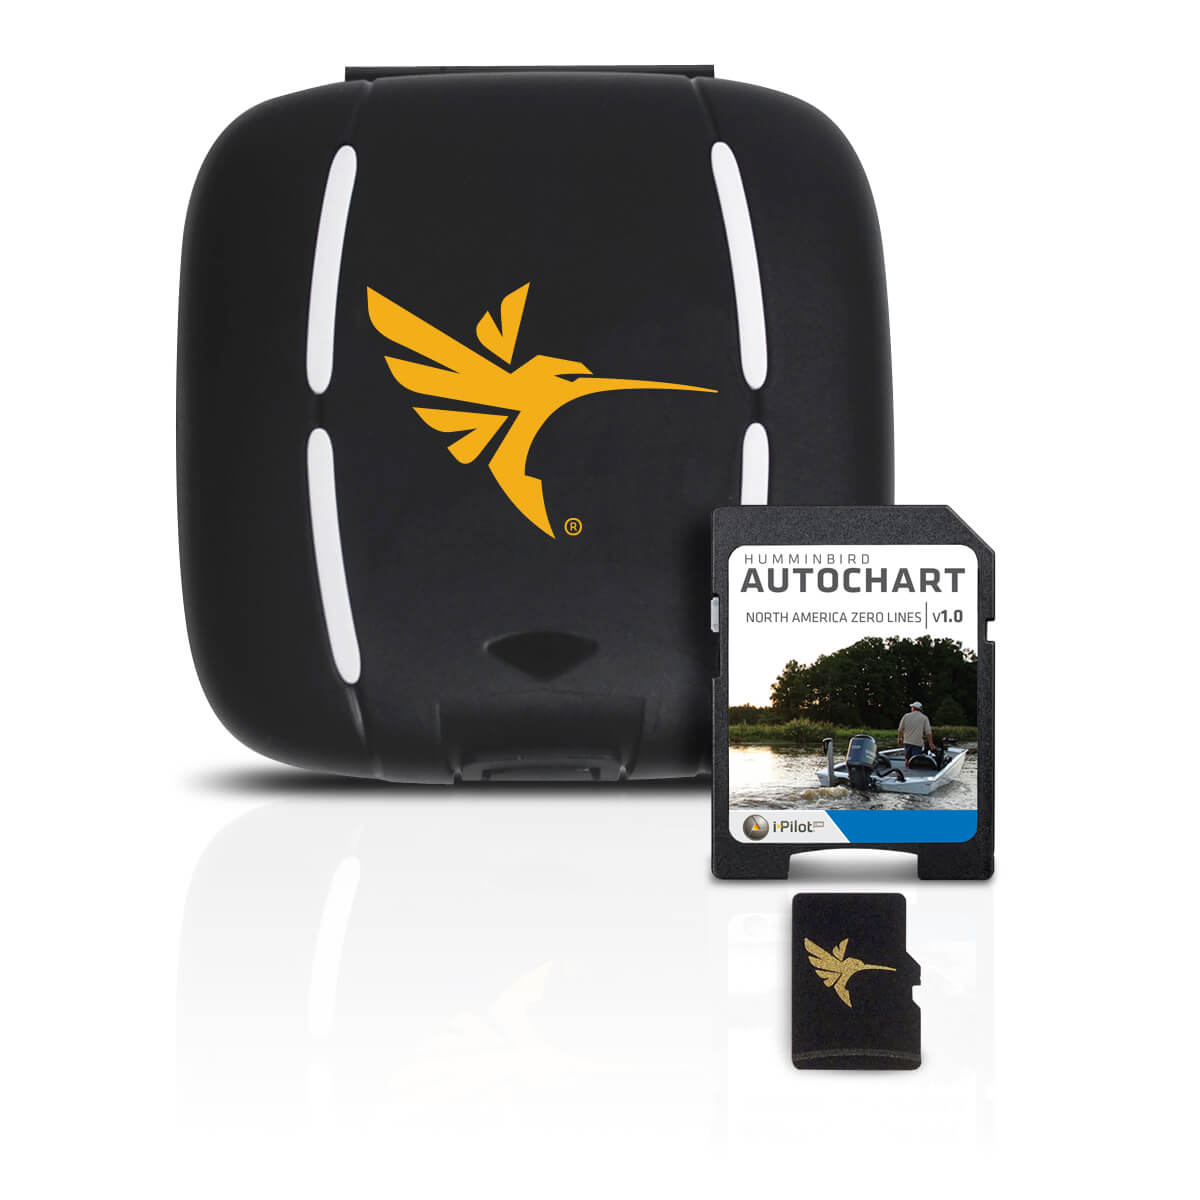 Humminbird AutoChart Zero Line SD Card - North America